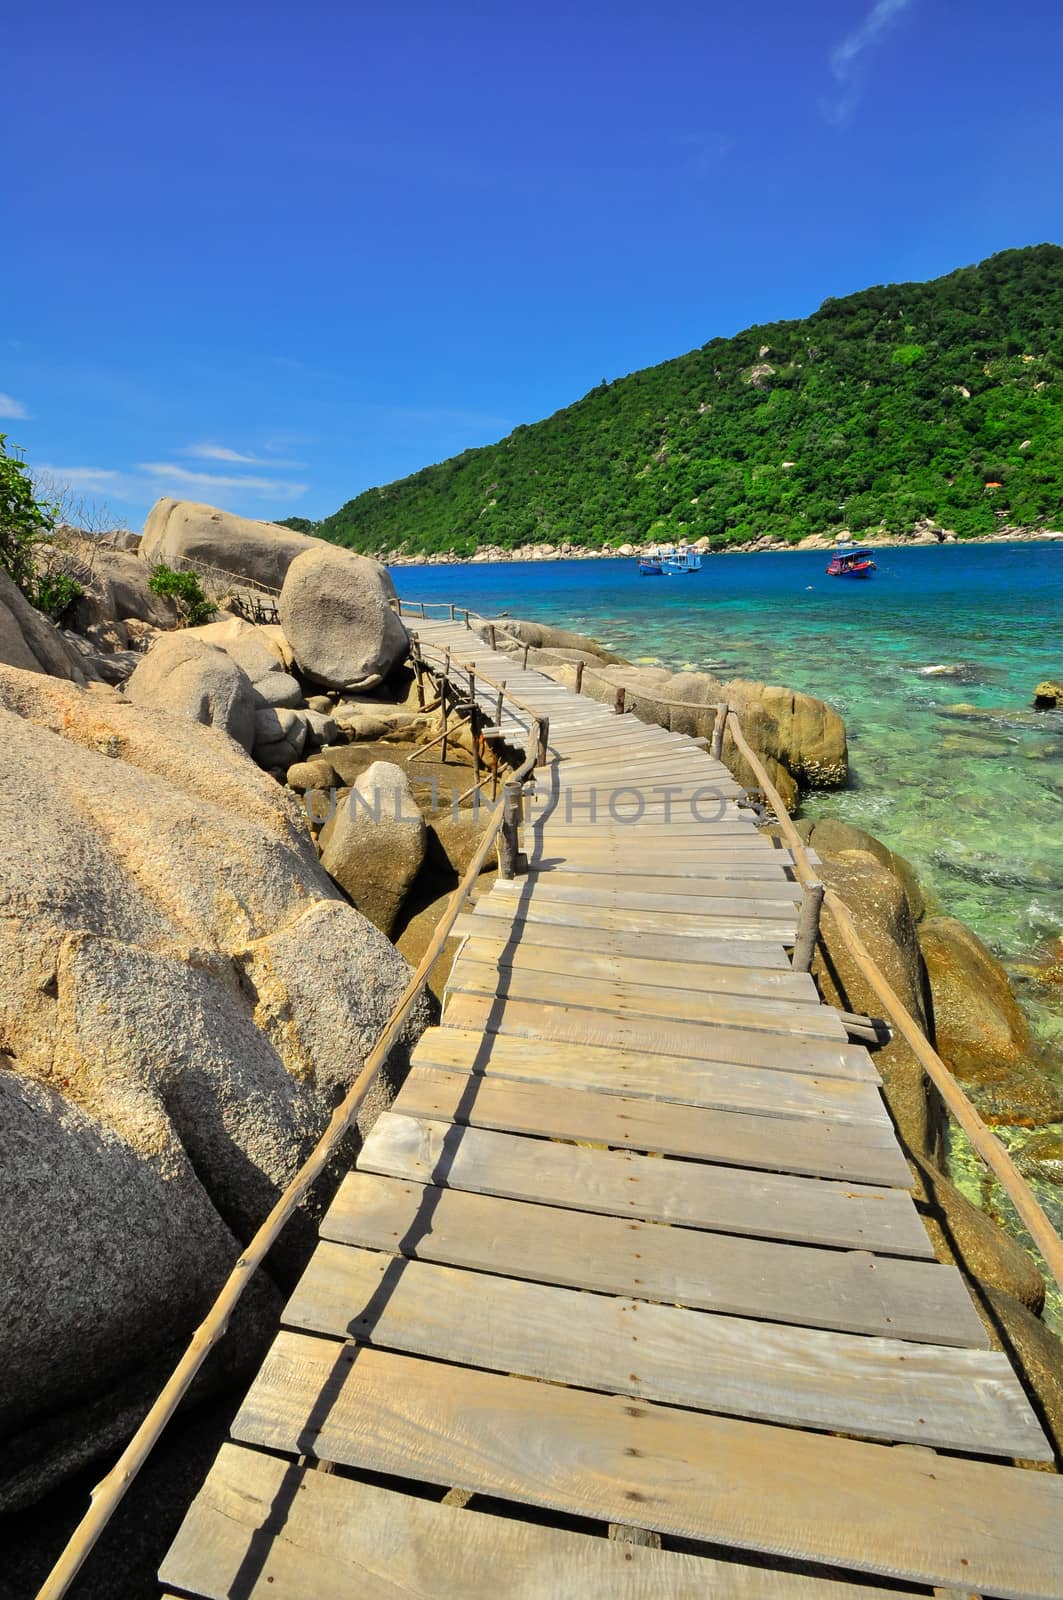 Thailand Koh Tao - a paradise island Boardwalk by weltreisendertj